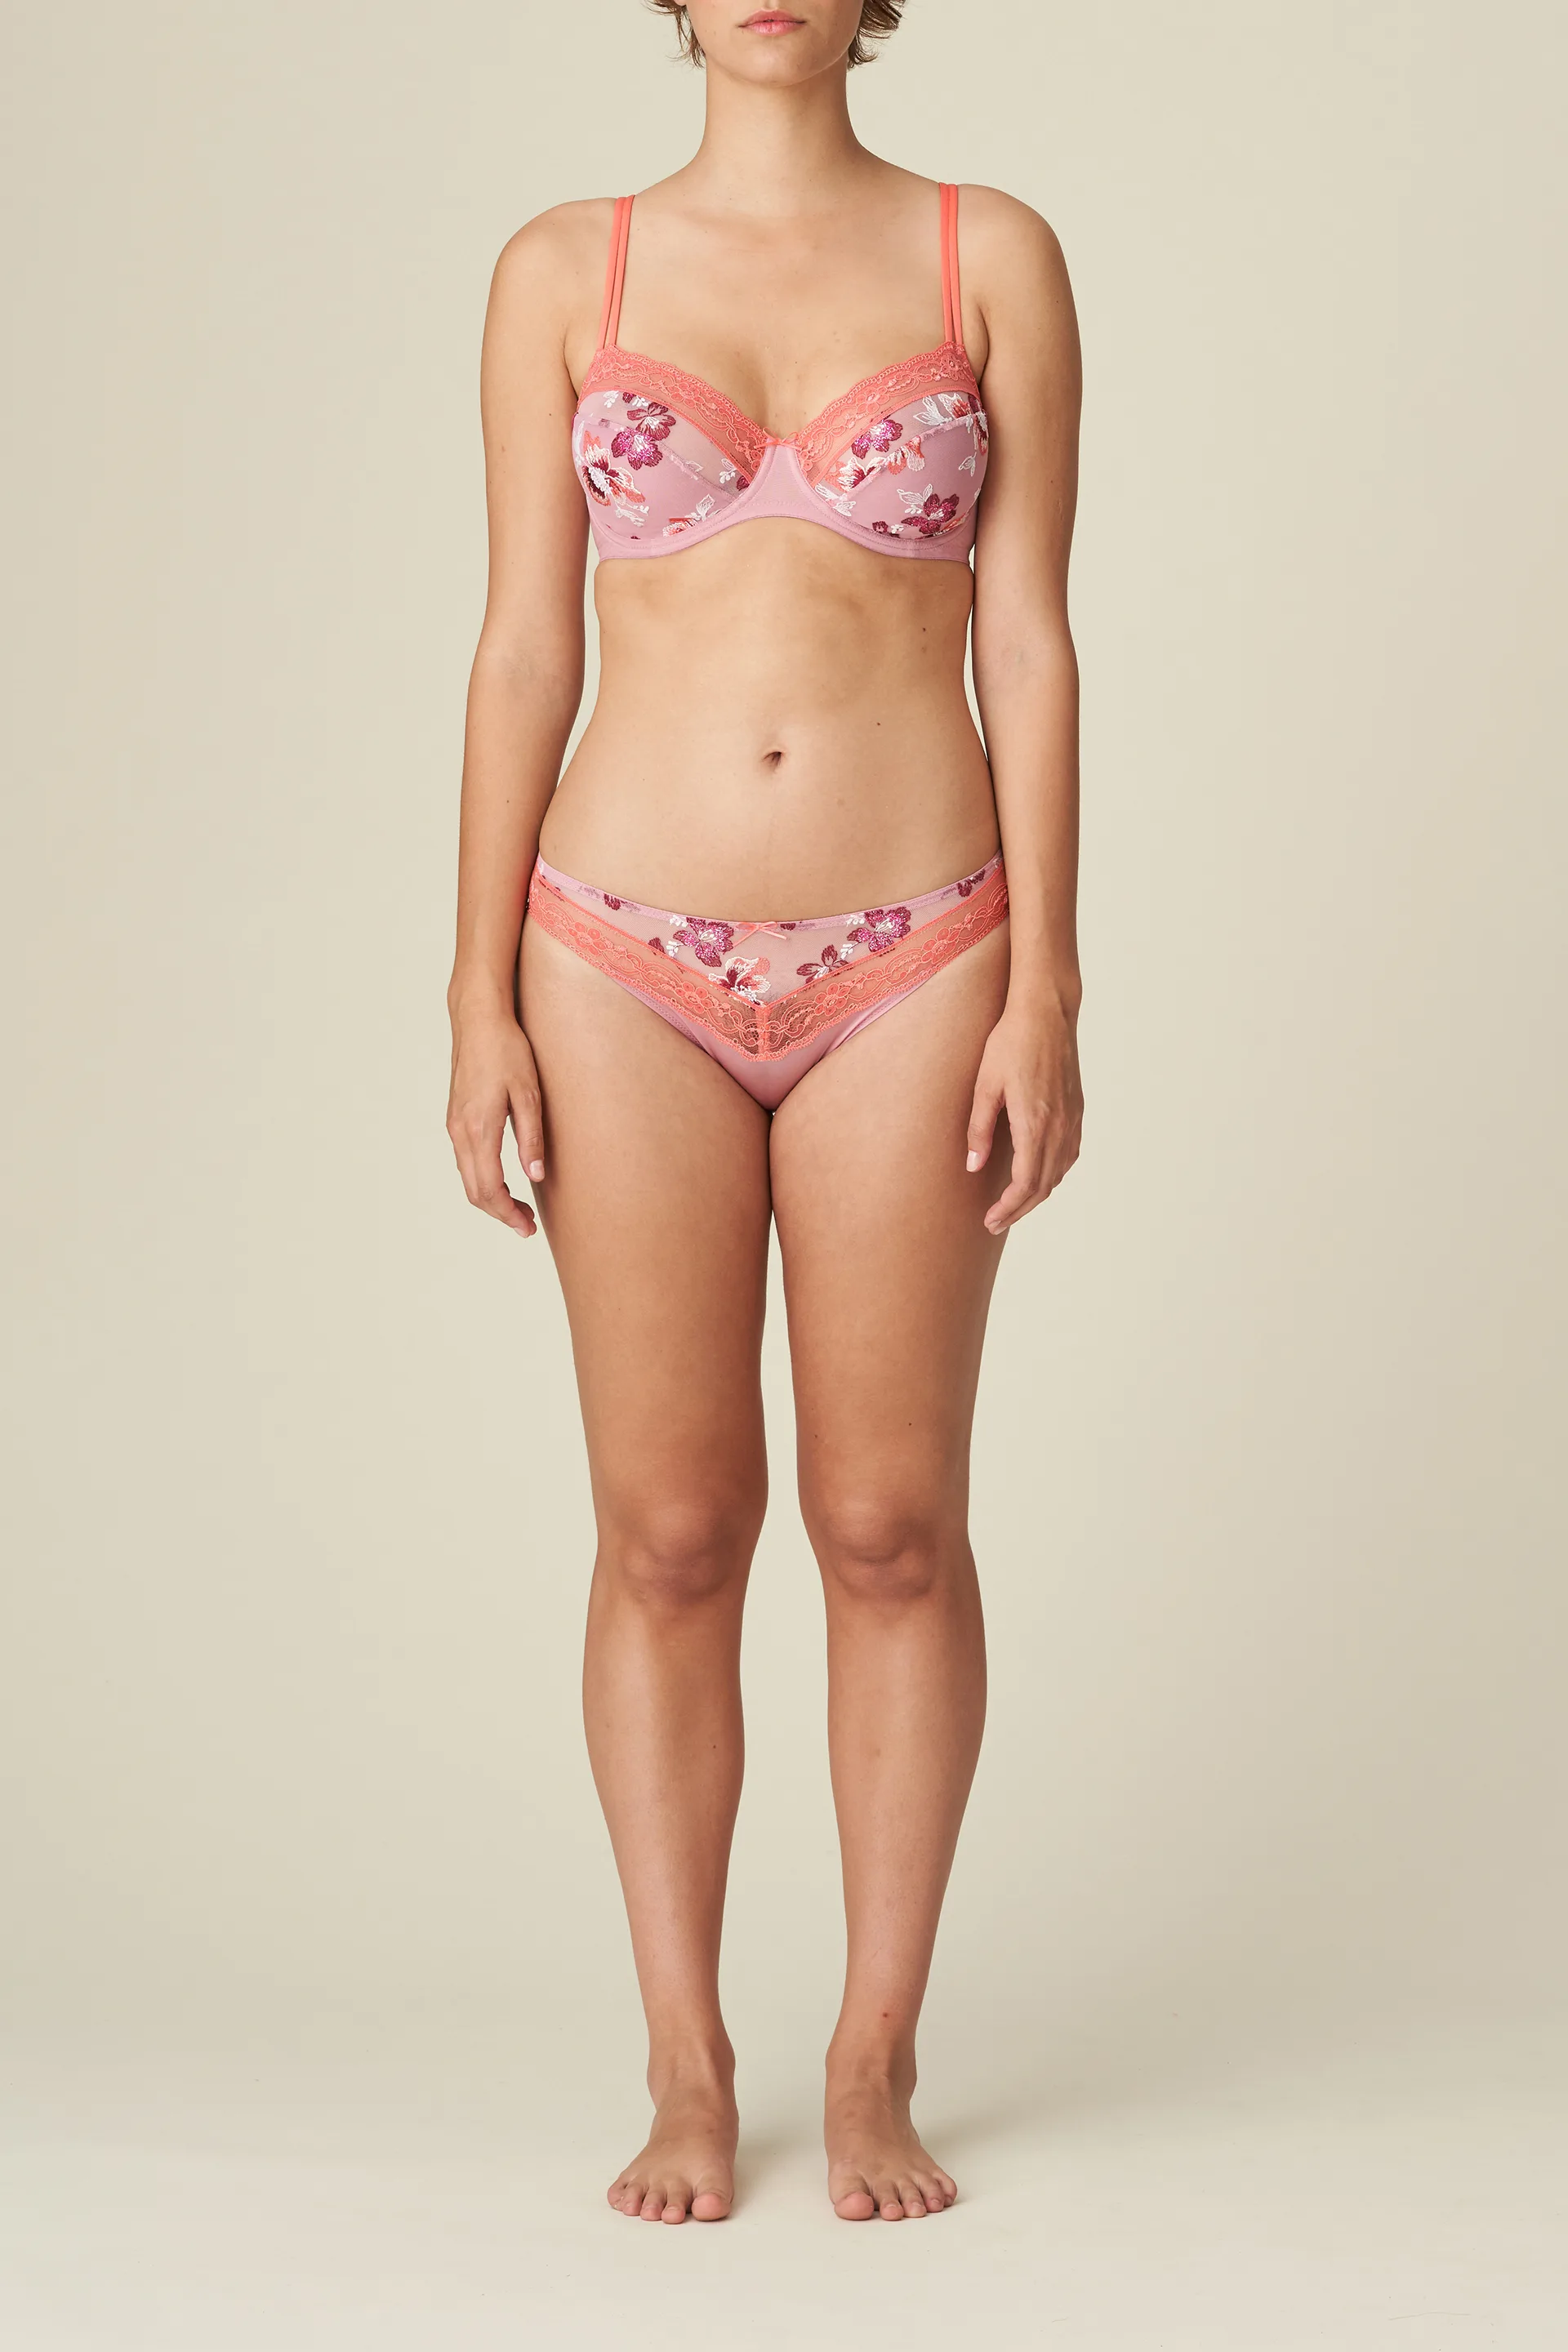 Buy online Pink Net Bikini Panty from lingerie for Women by Madam